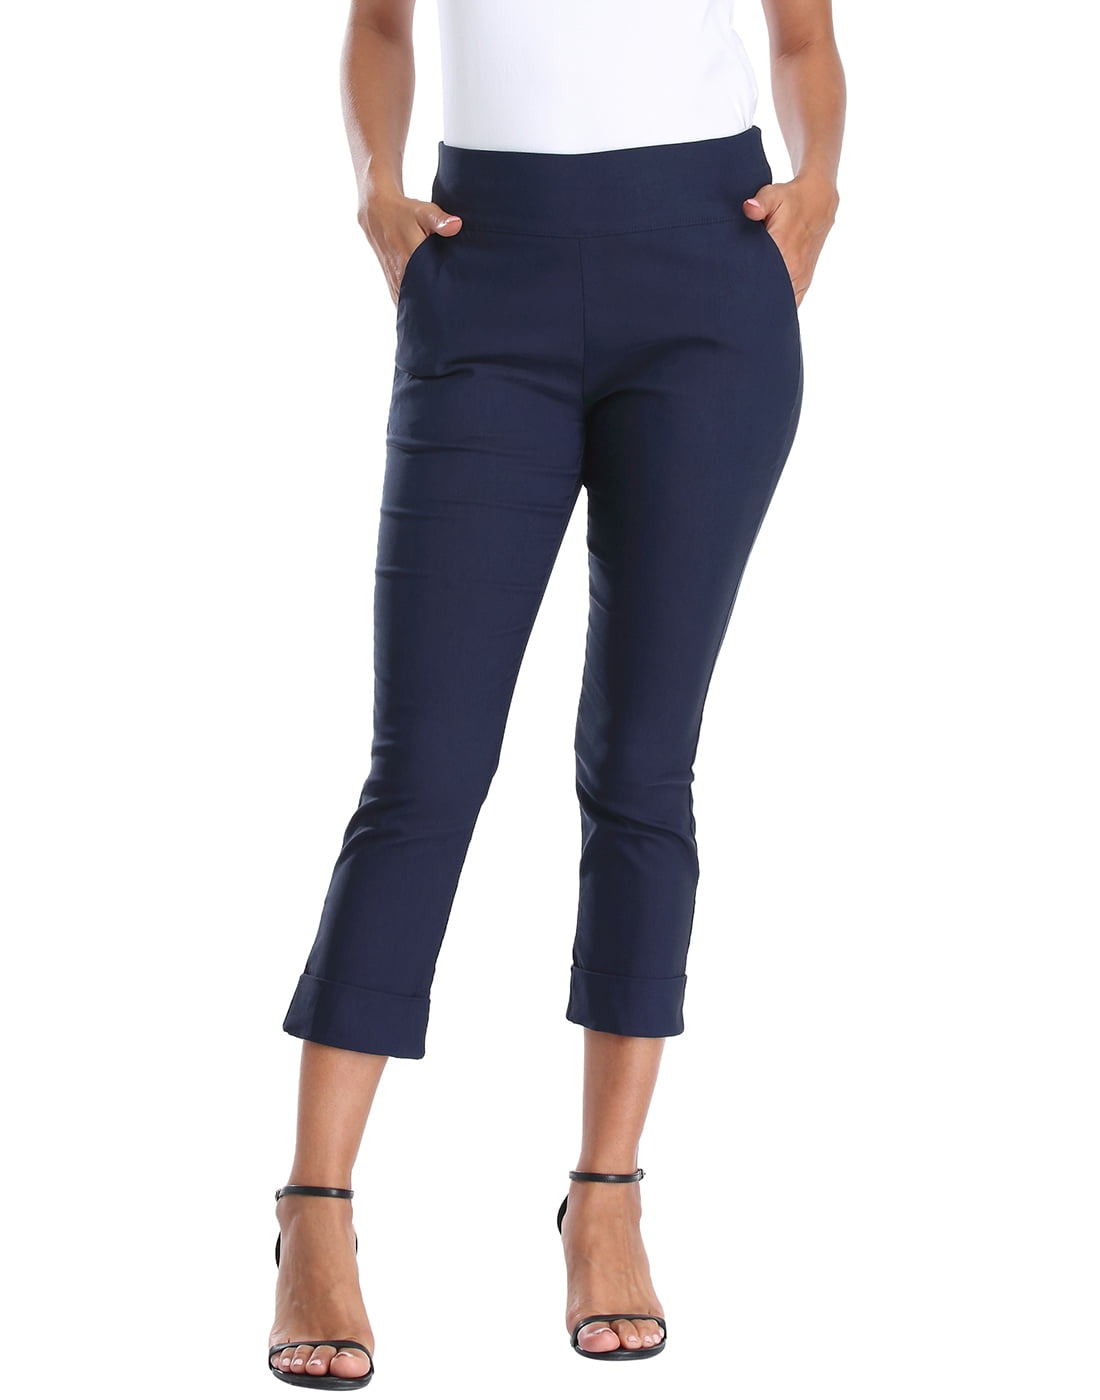 Indigo Blue High Waisted Capri Pants -   Capri pants, Cute crop tops,  Womens clothing tops